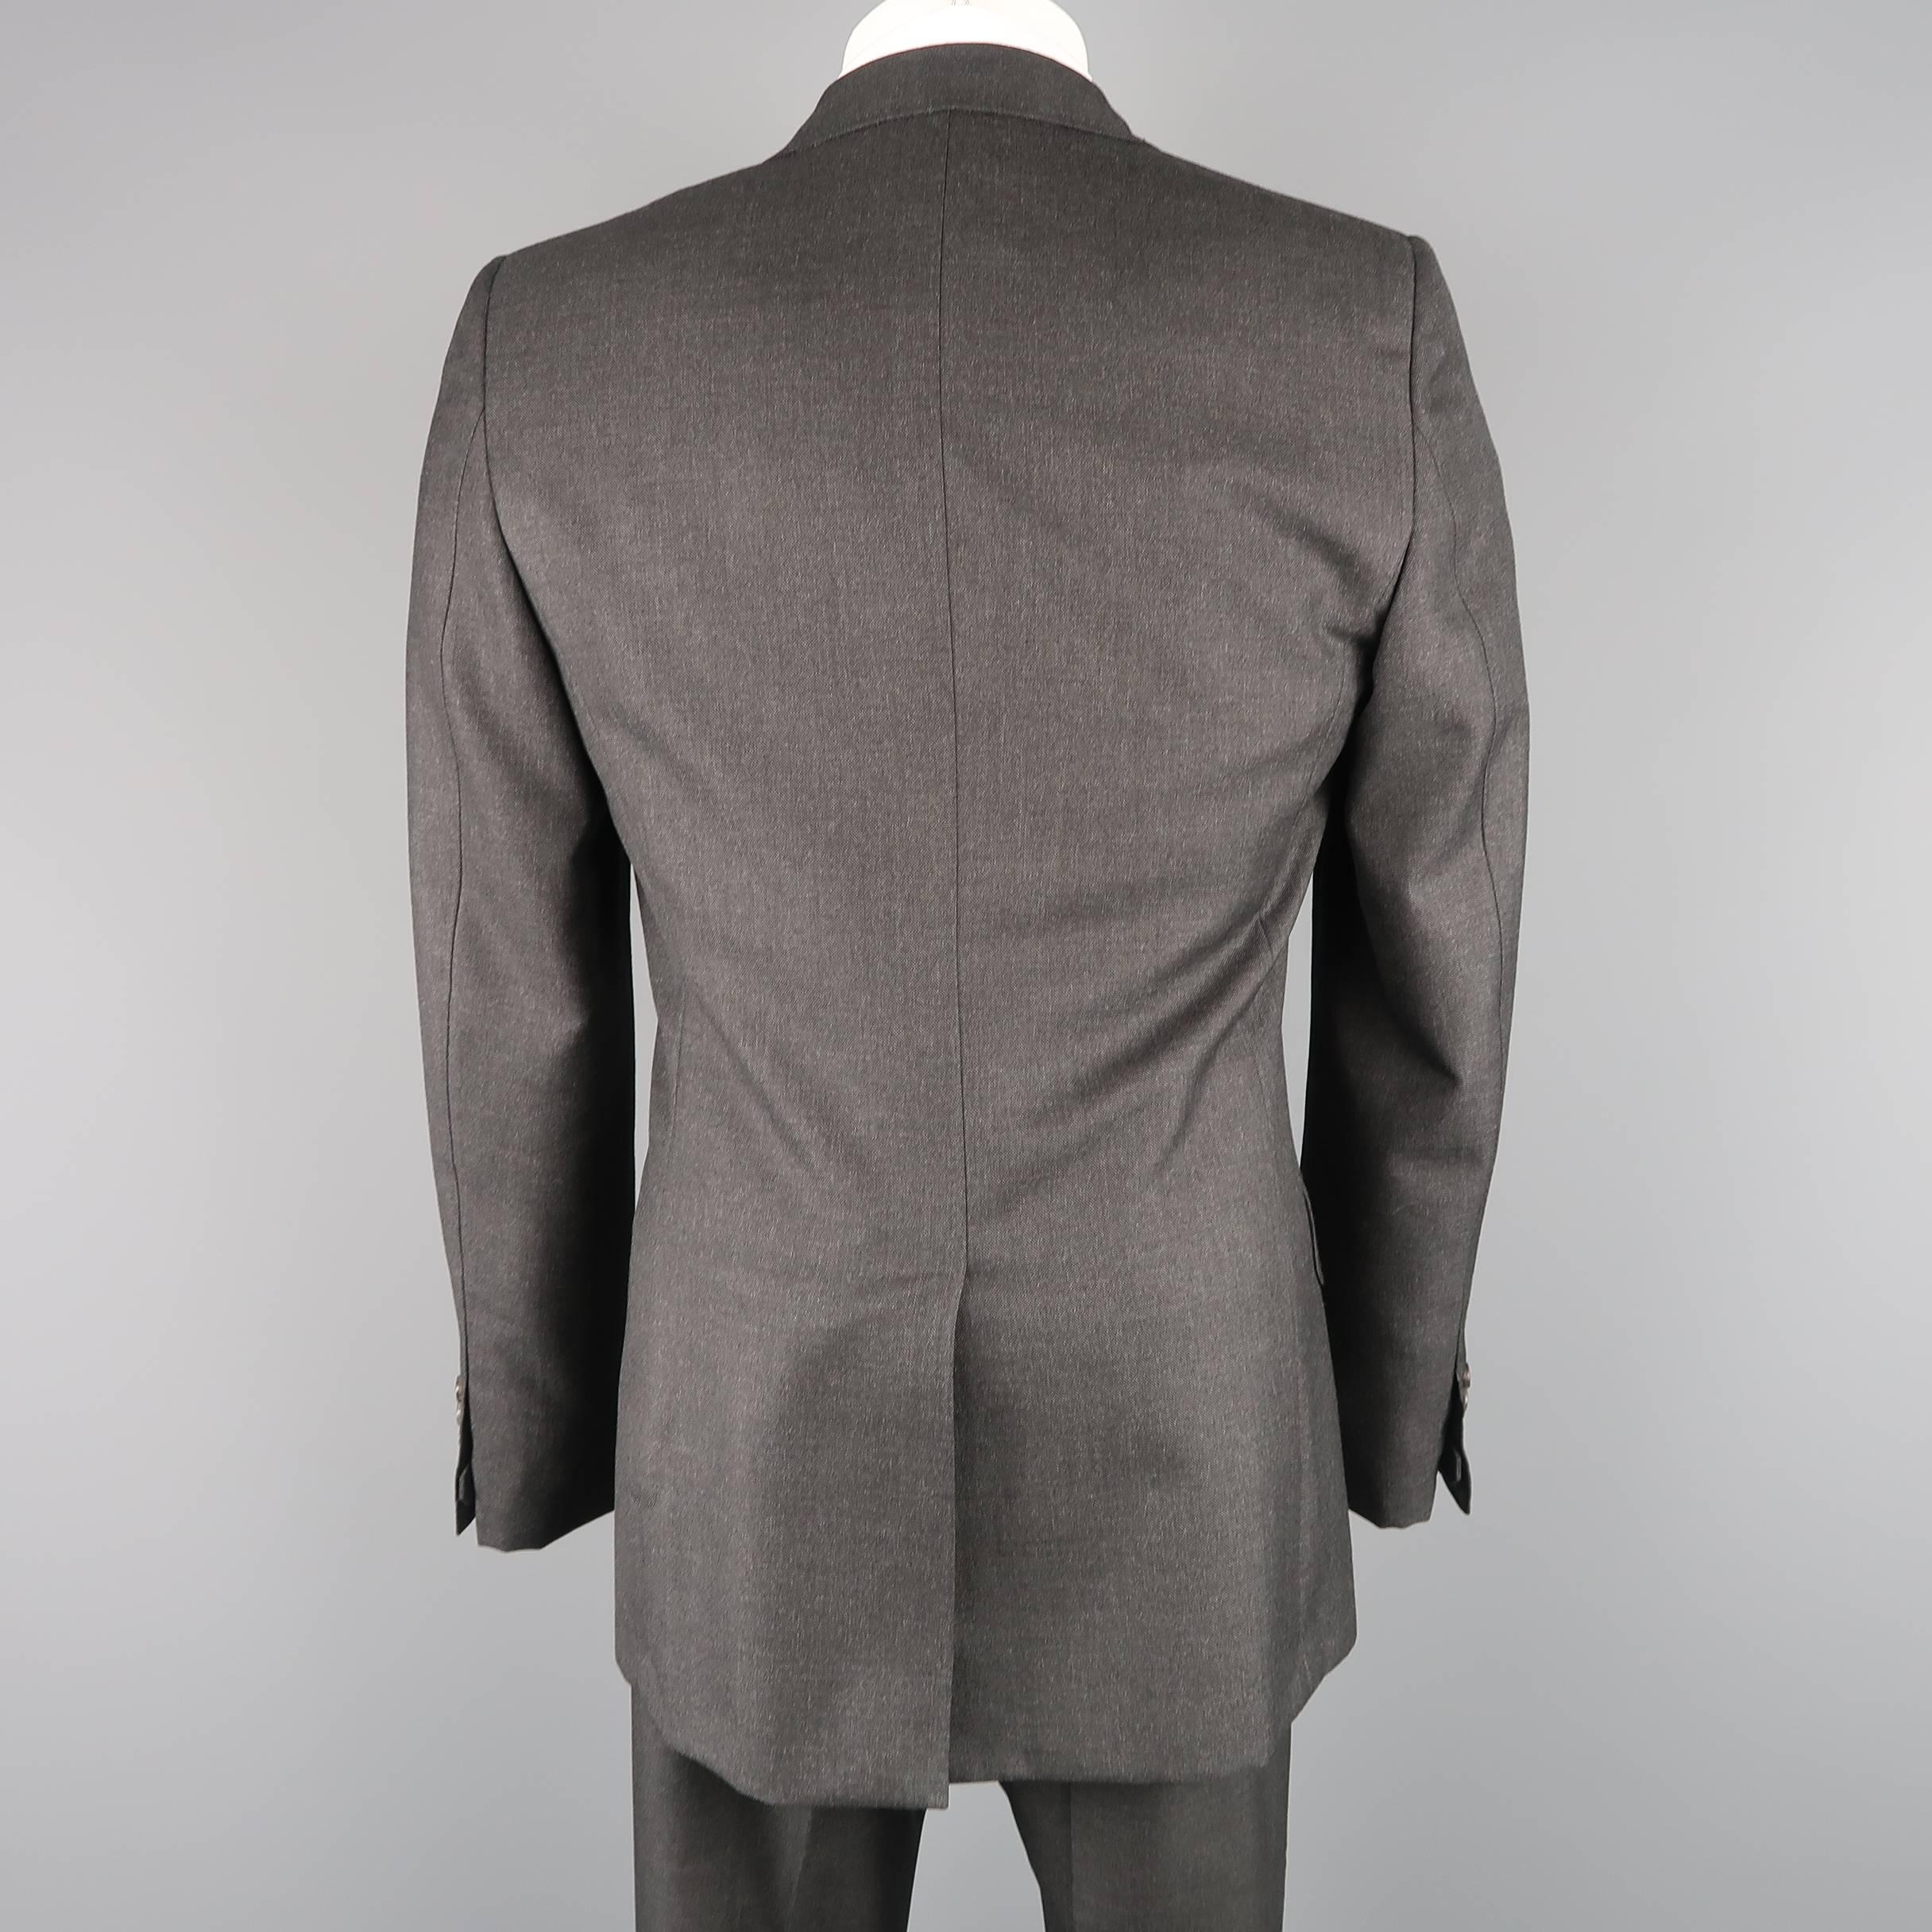 Yves Saint Laurent By Tom Ford Men's Charcoal Wool 2 Button Notch Lapel Suit 2